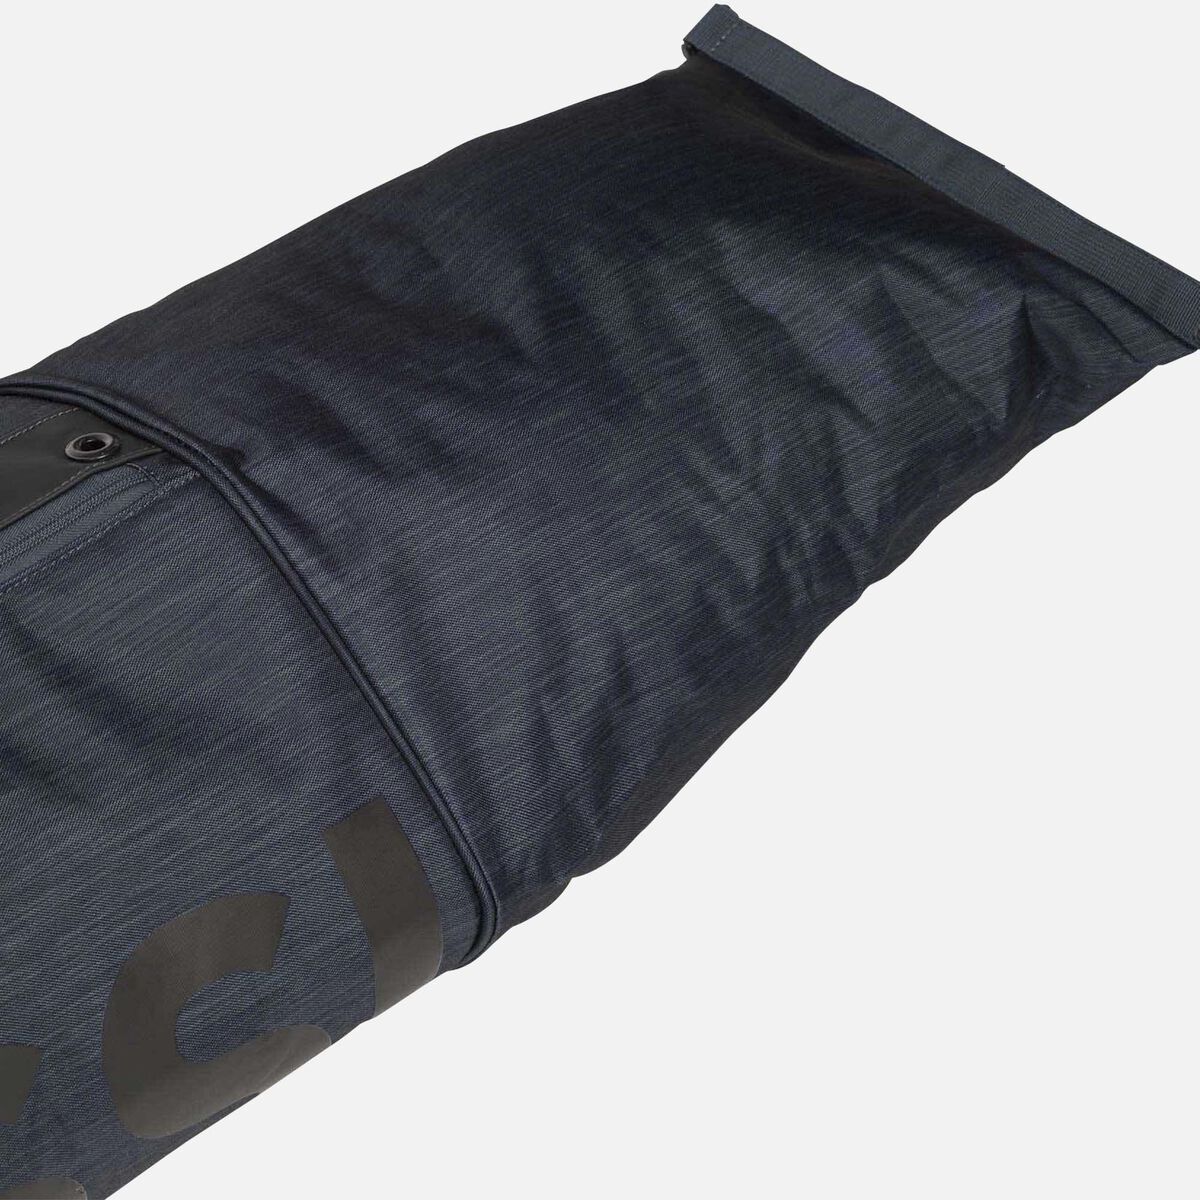 Unisex Ski Bag Extendable 2 Pairs Padded 160-210 Cm